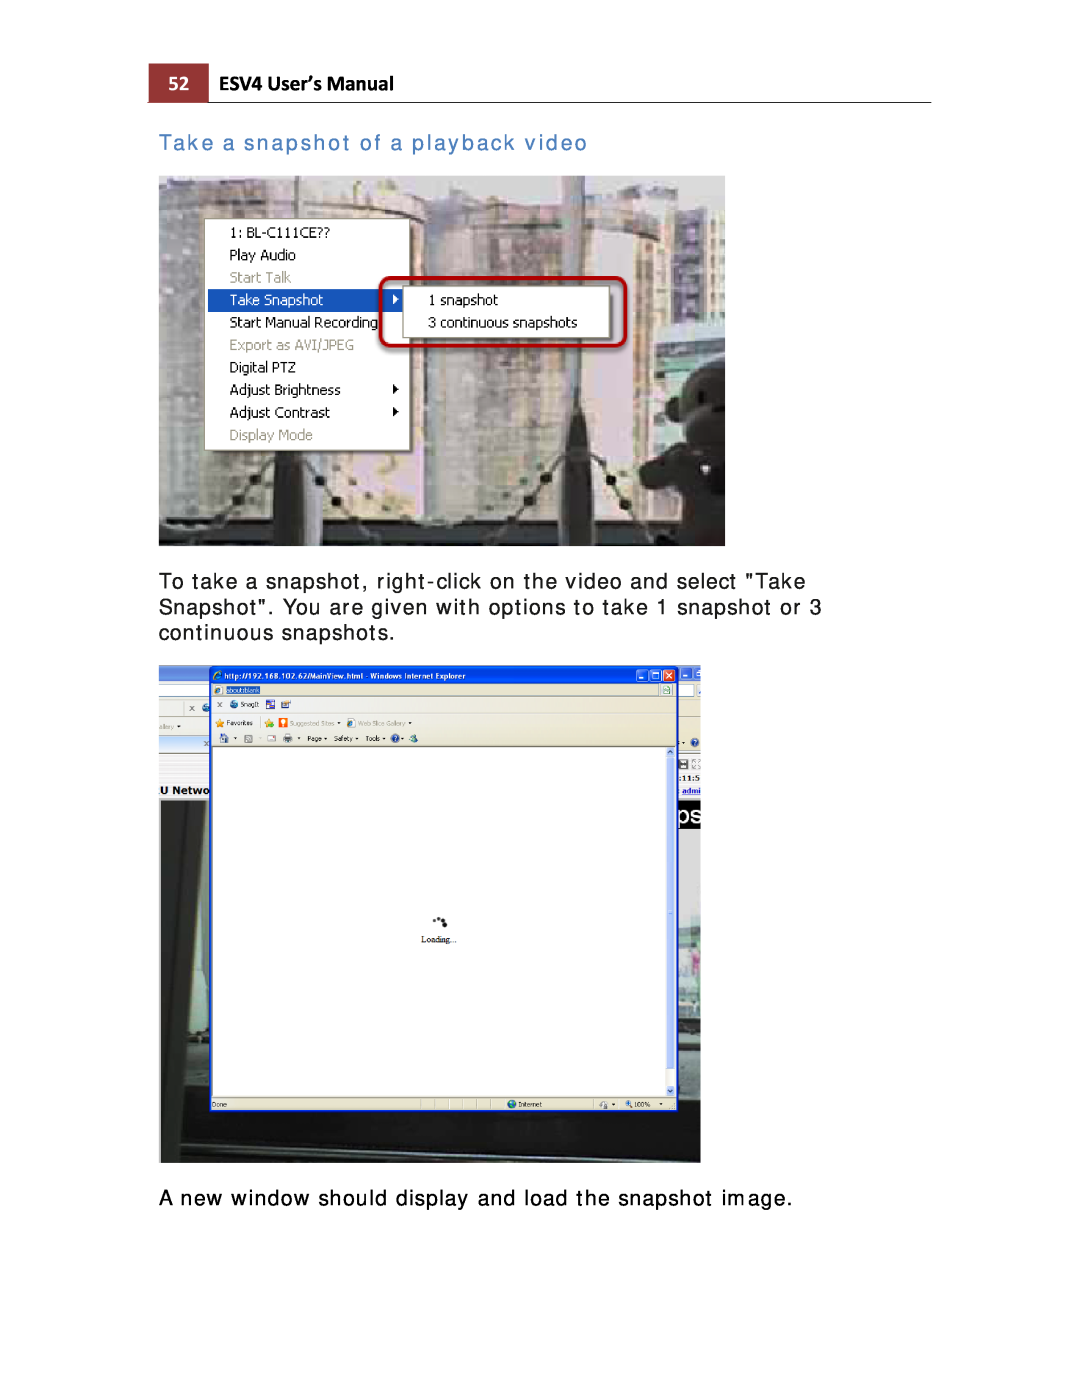 Toshiba ESV41T user manual 52ESV4 User’s Manual, Take a snapshot of a playback video 